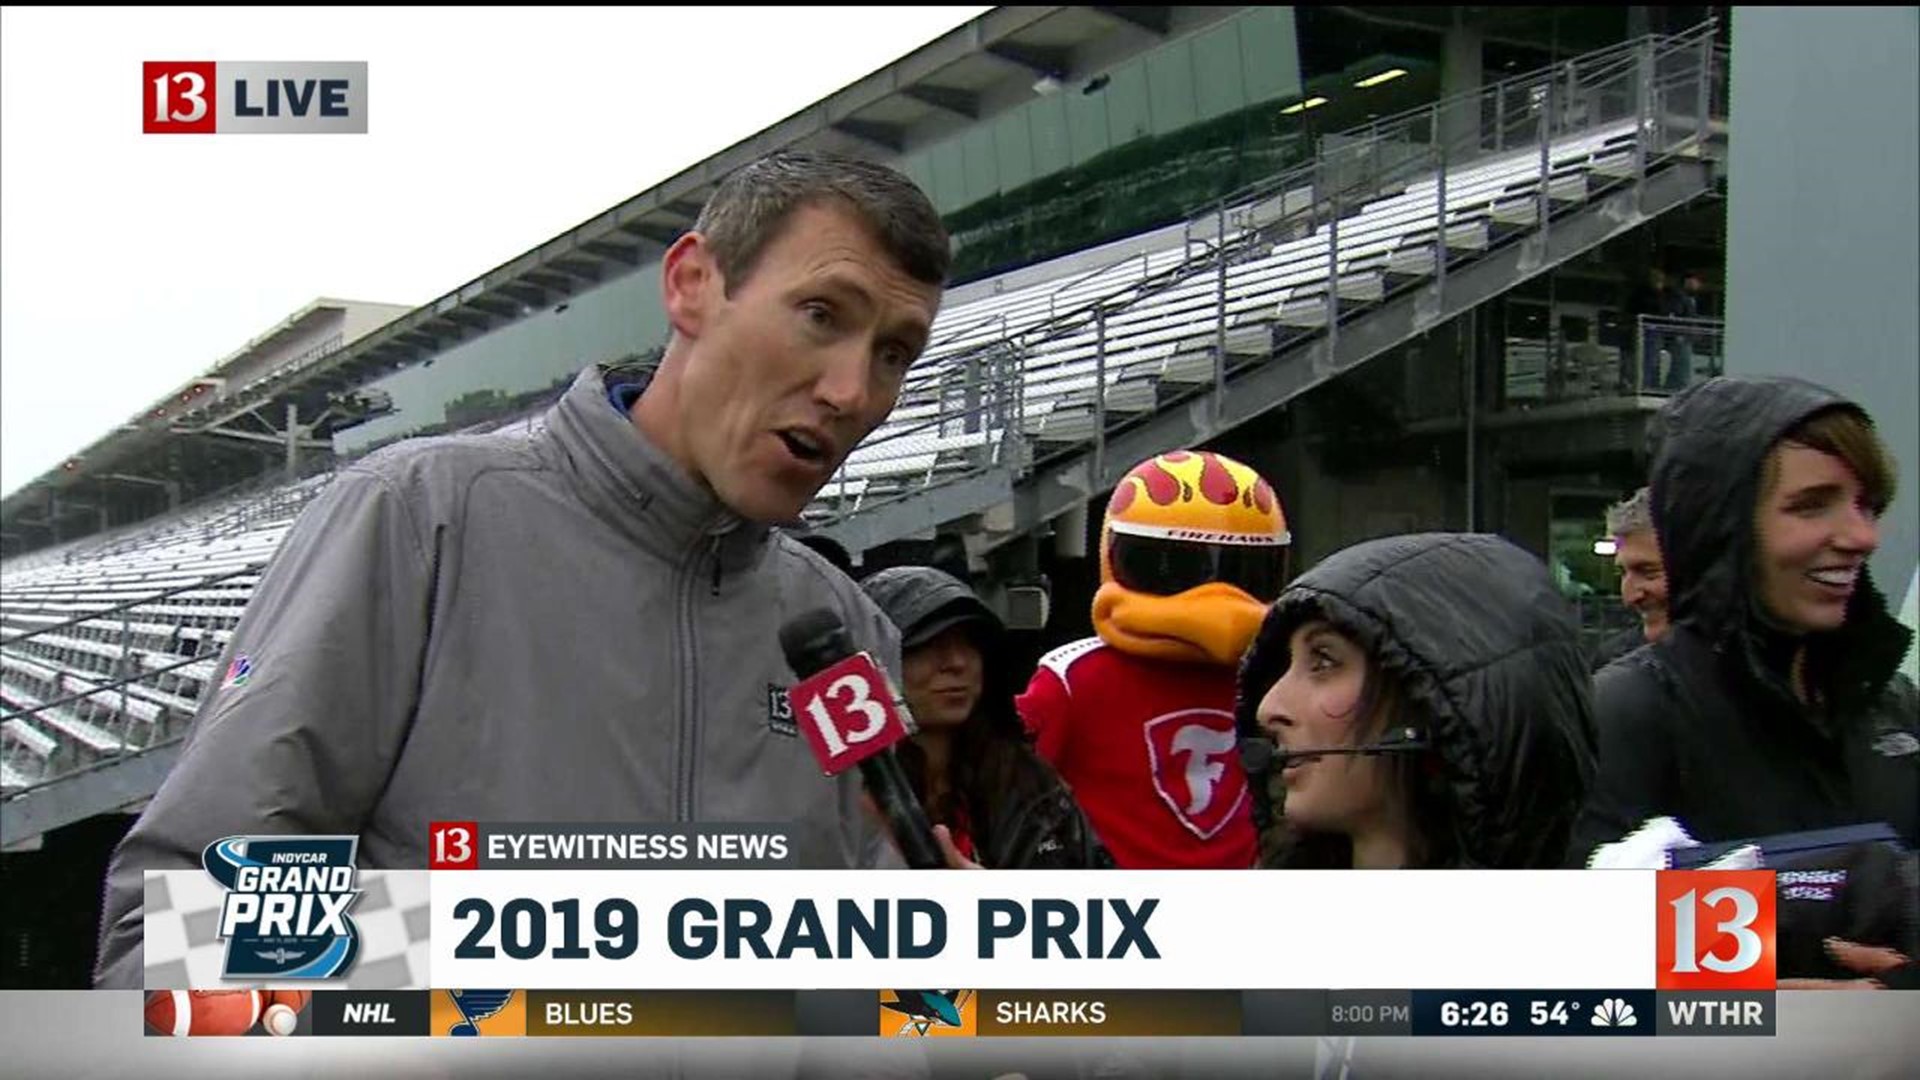 2019 Grand Prix Winner